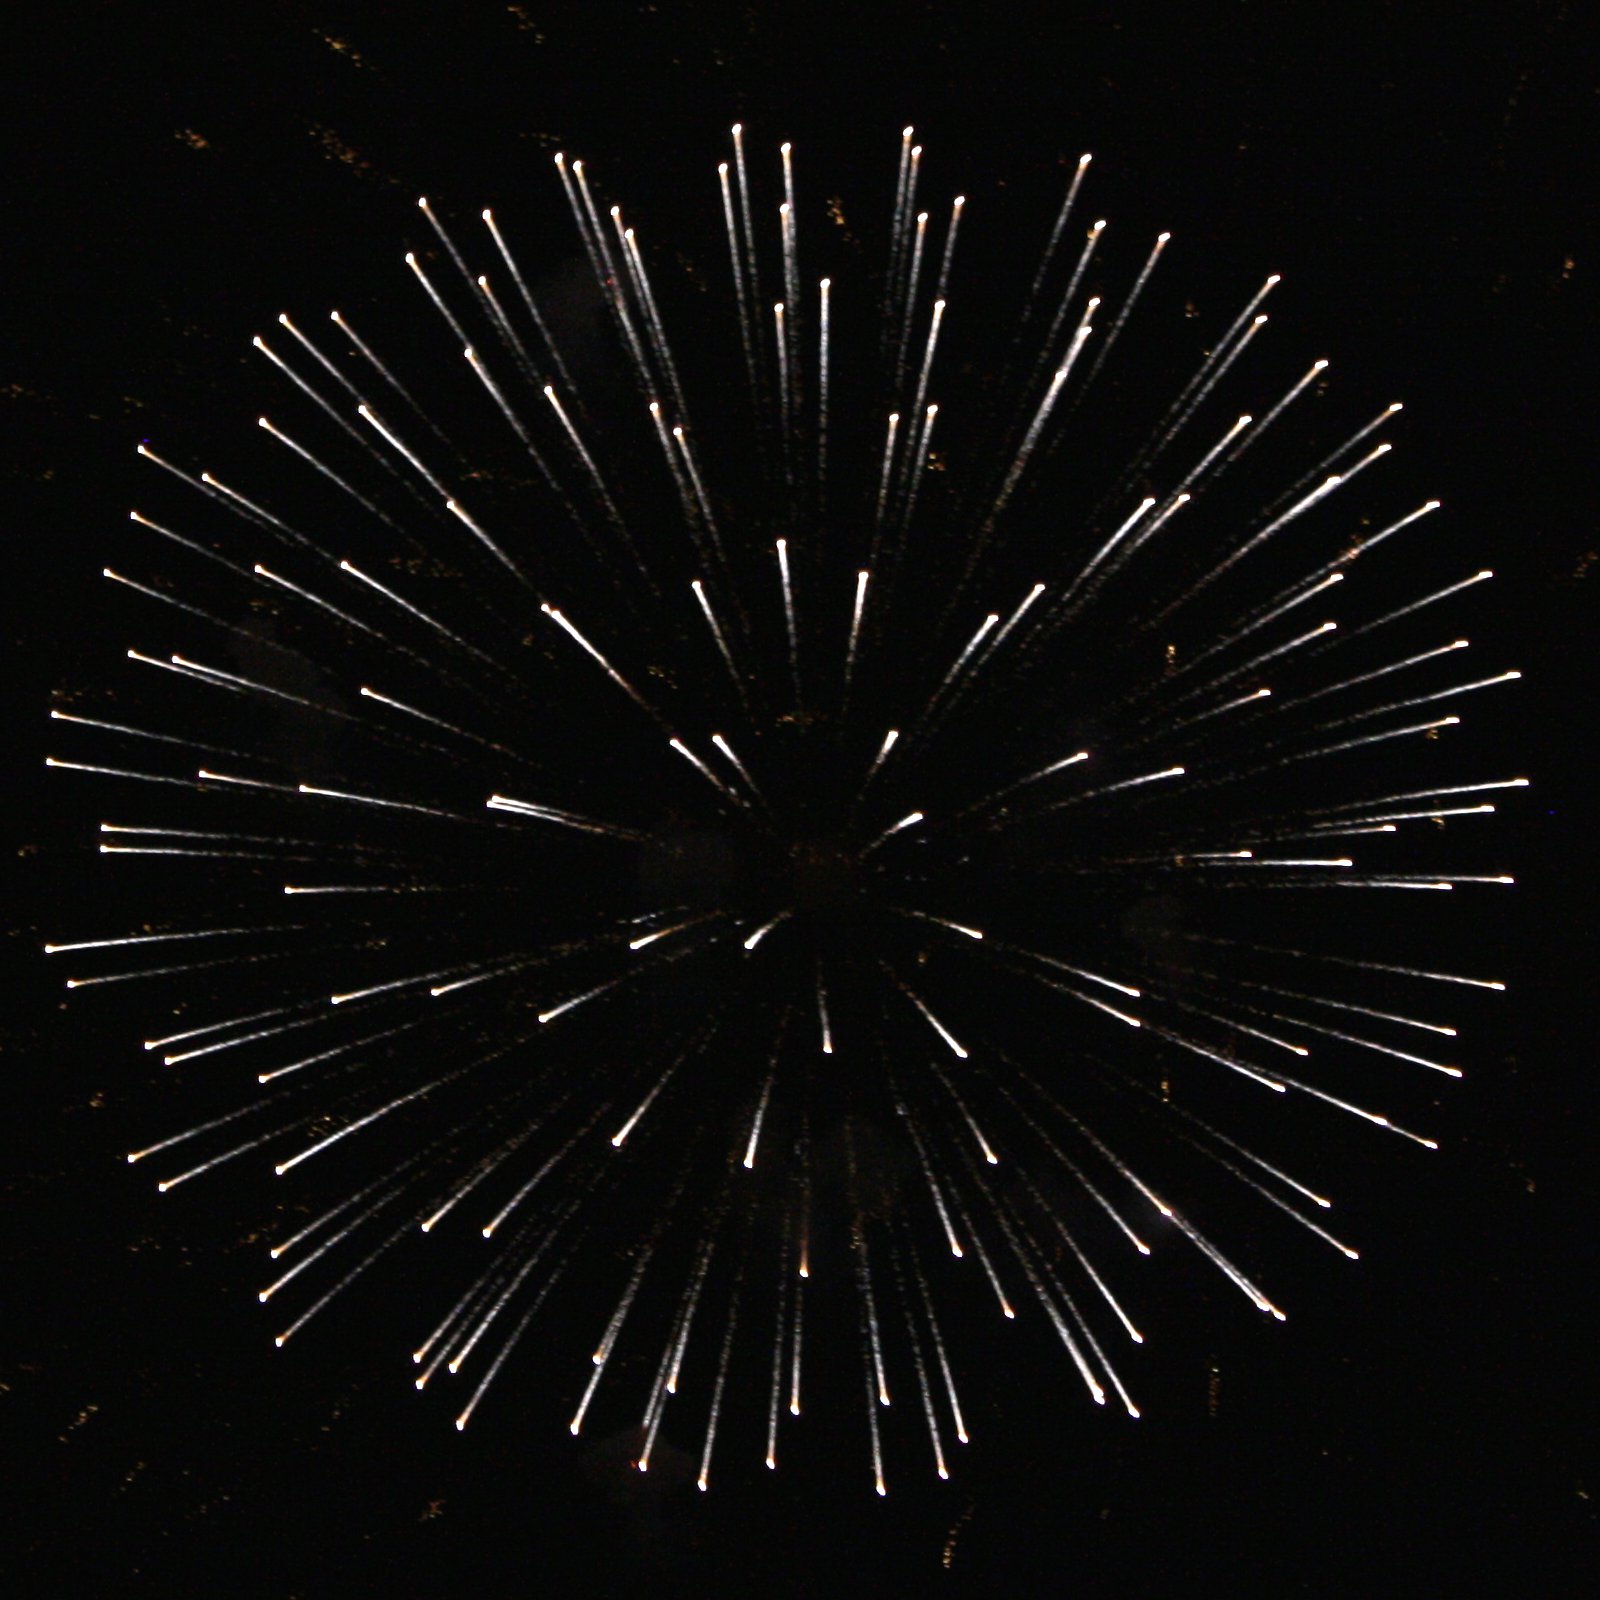 White Fireworks Star Burst Picture   Free Photograph   Photos Public    